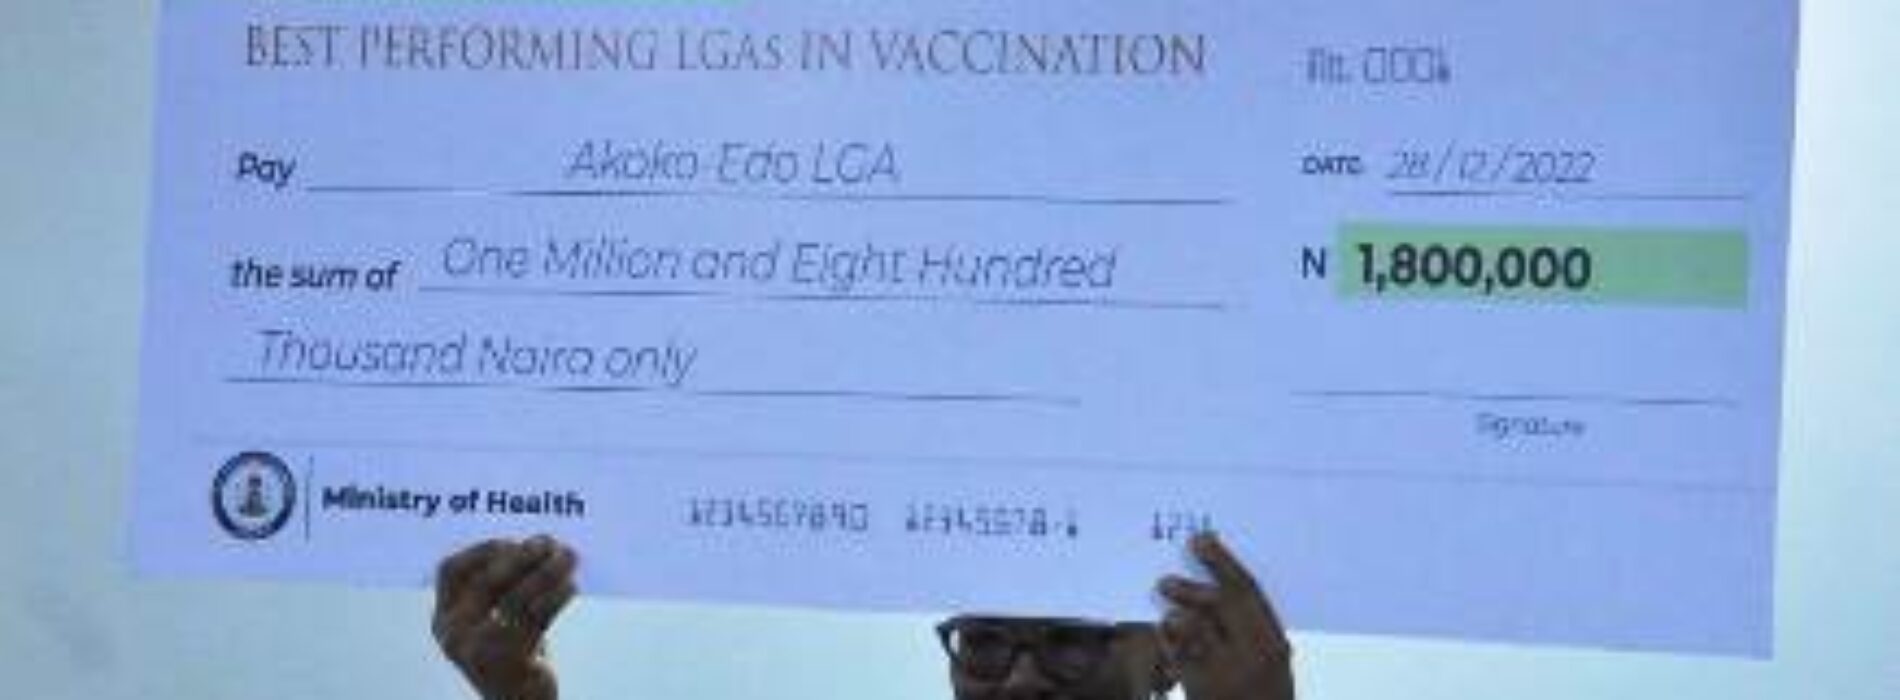 Edo splashes awards on best performing LGAs in Vaccination